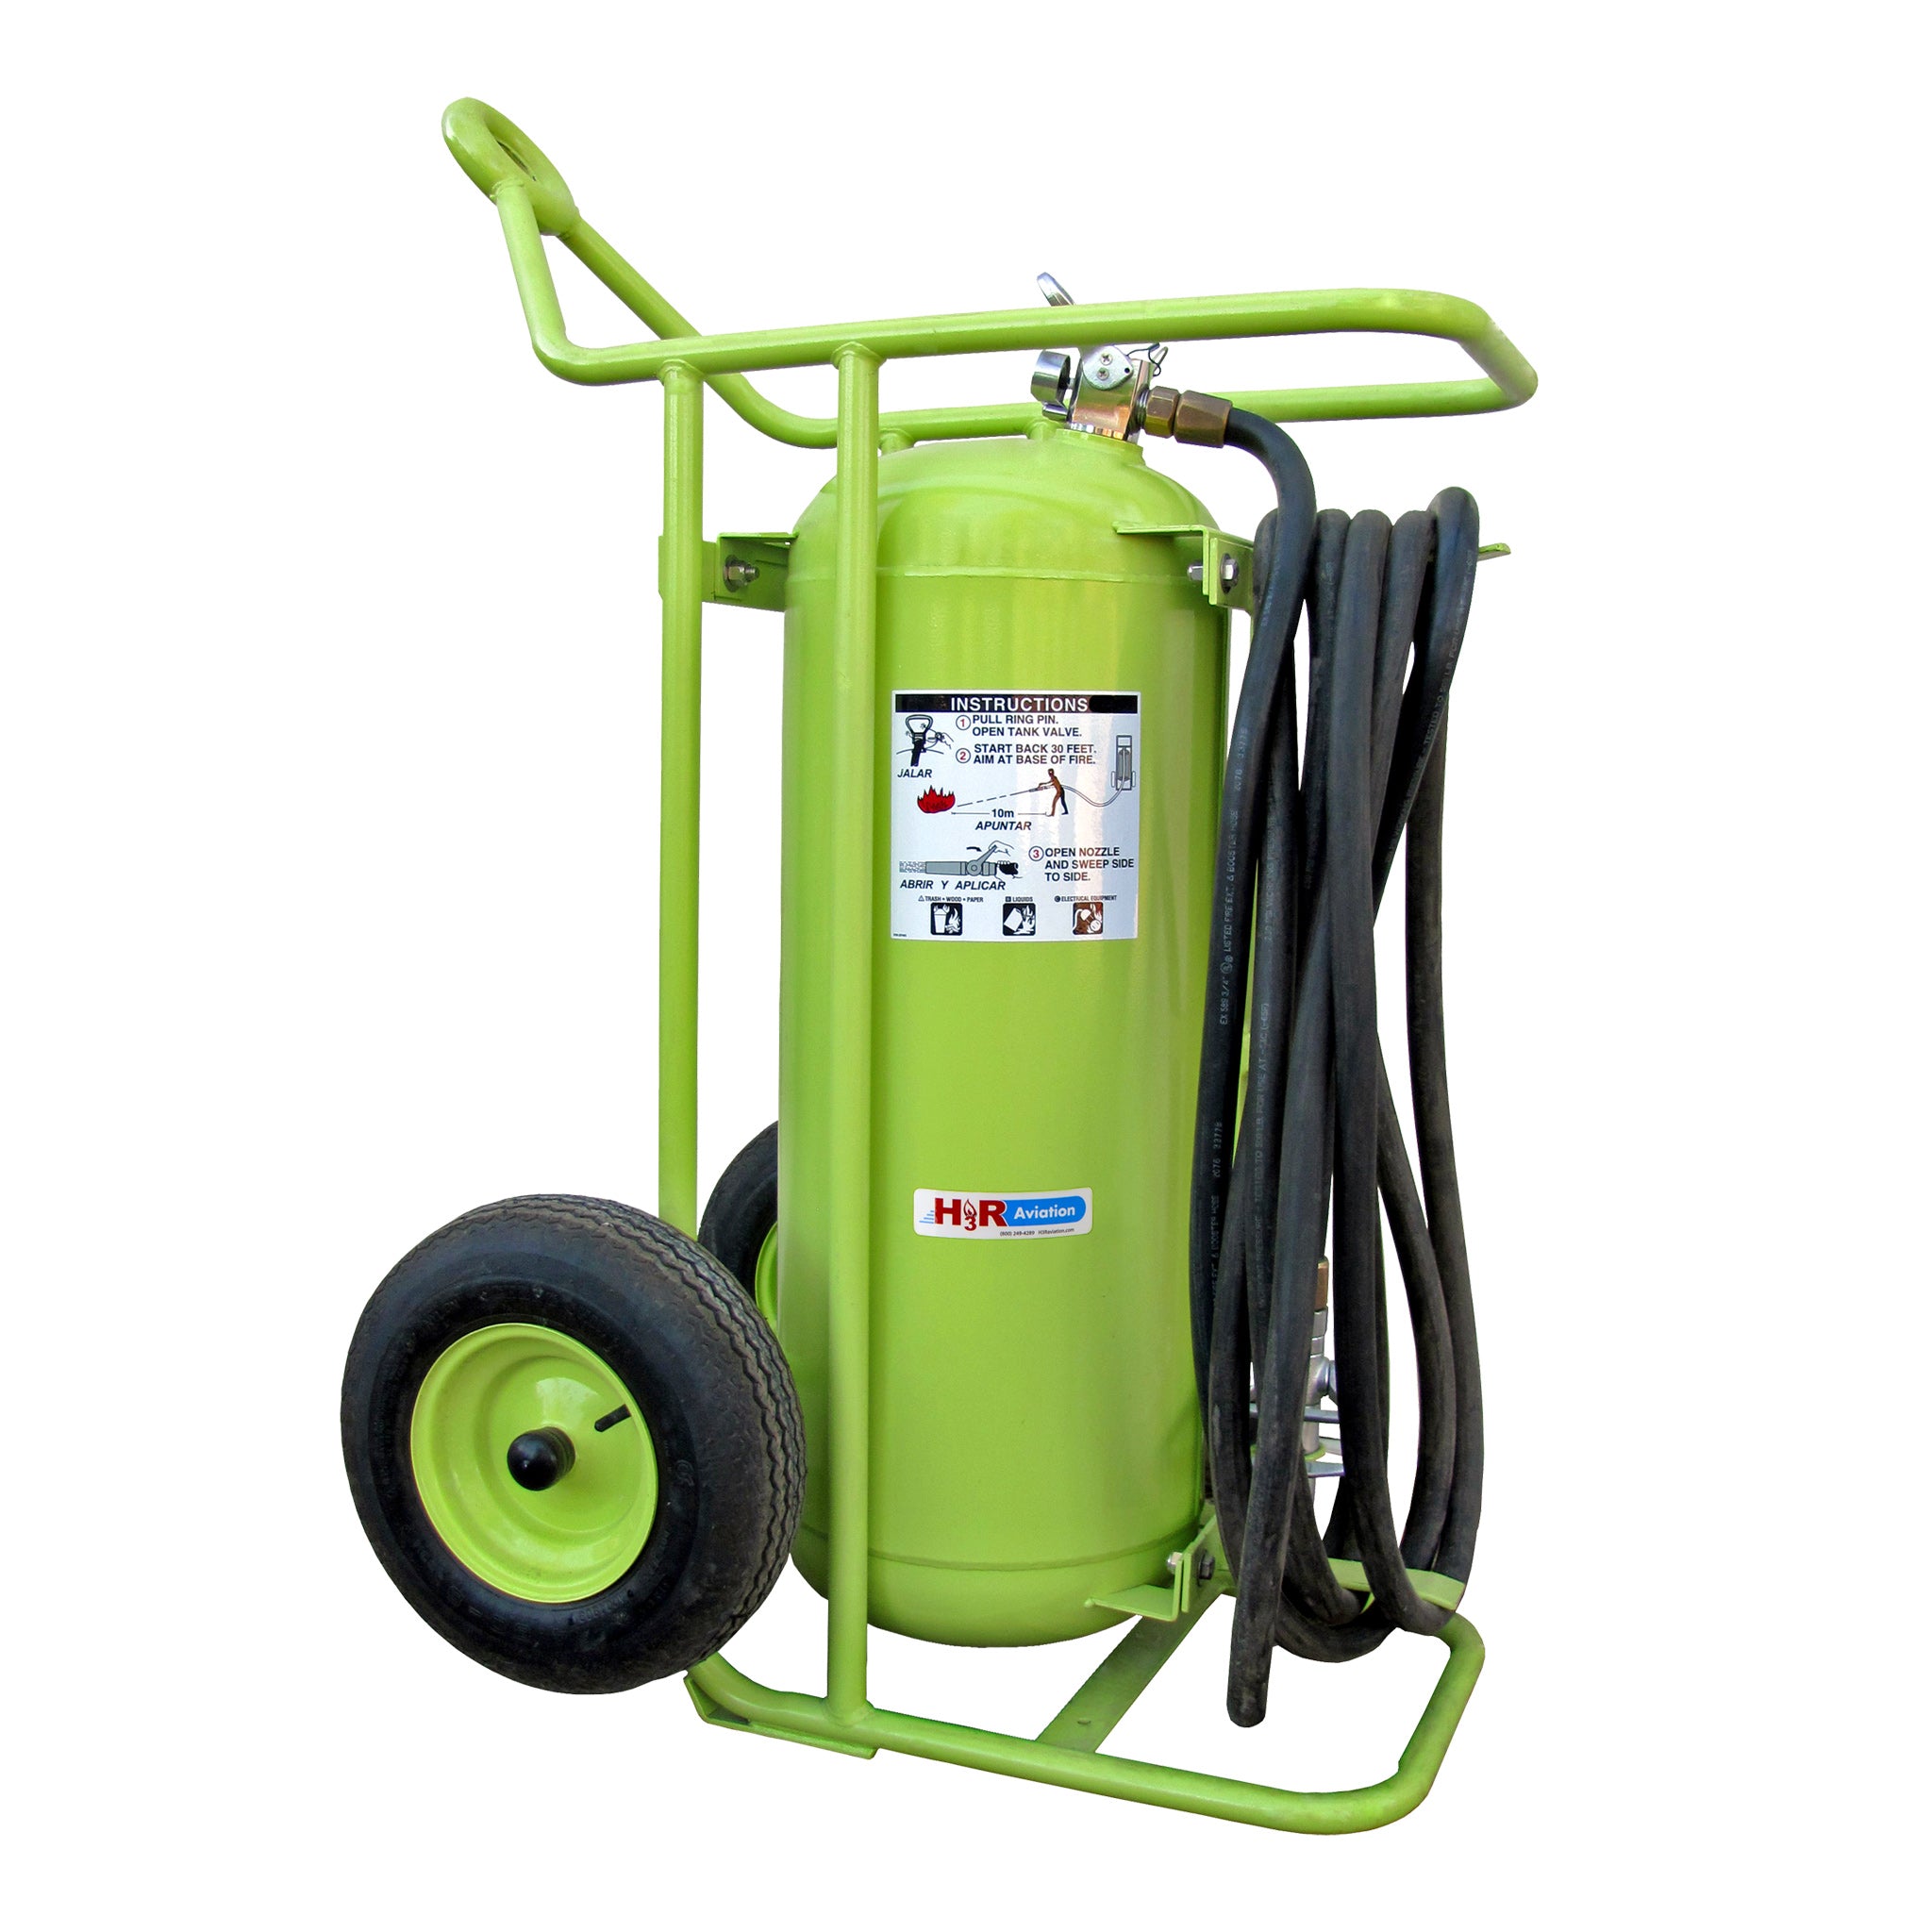 775 - 150 lb. Wheeled Novec 1230 Fire Extinguisher